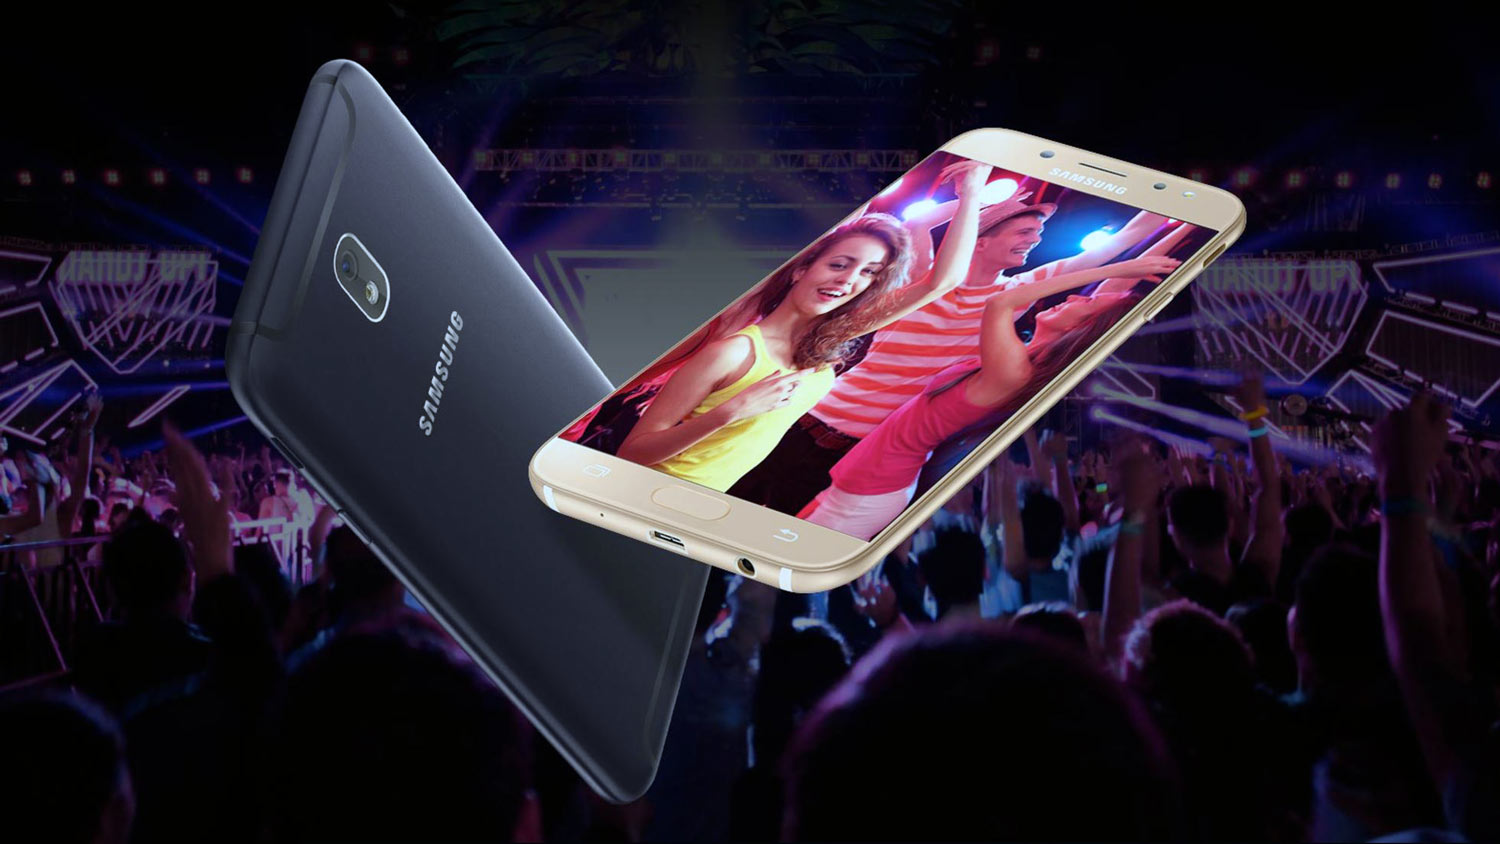 Samsung Galaxy J7 Pro Dan Galaxy J7 Max Dilancarkan